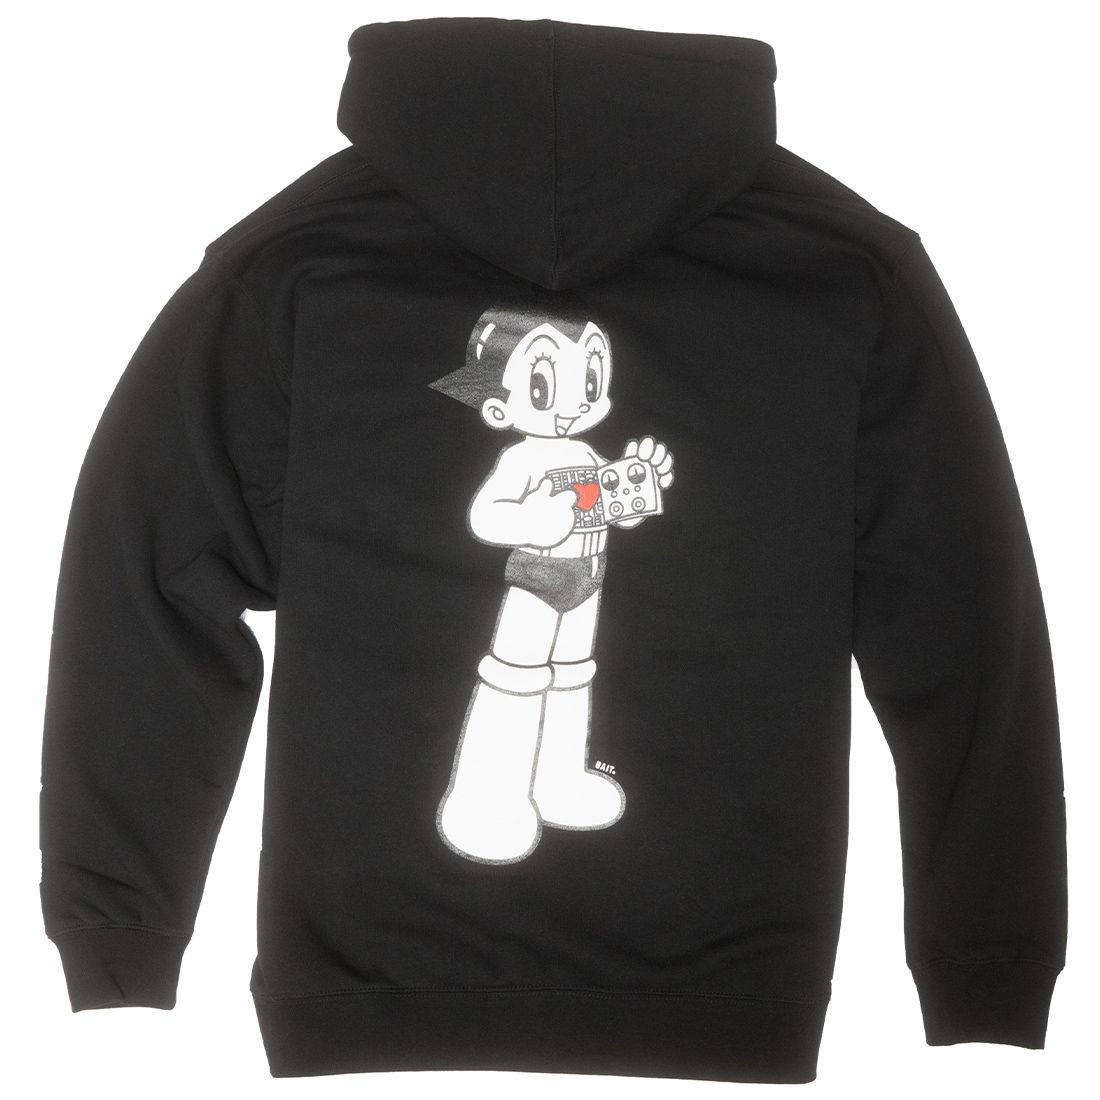 PICK Astro Boy Zipper Hoodie Sweater Cartoon Pullover 